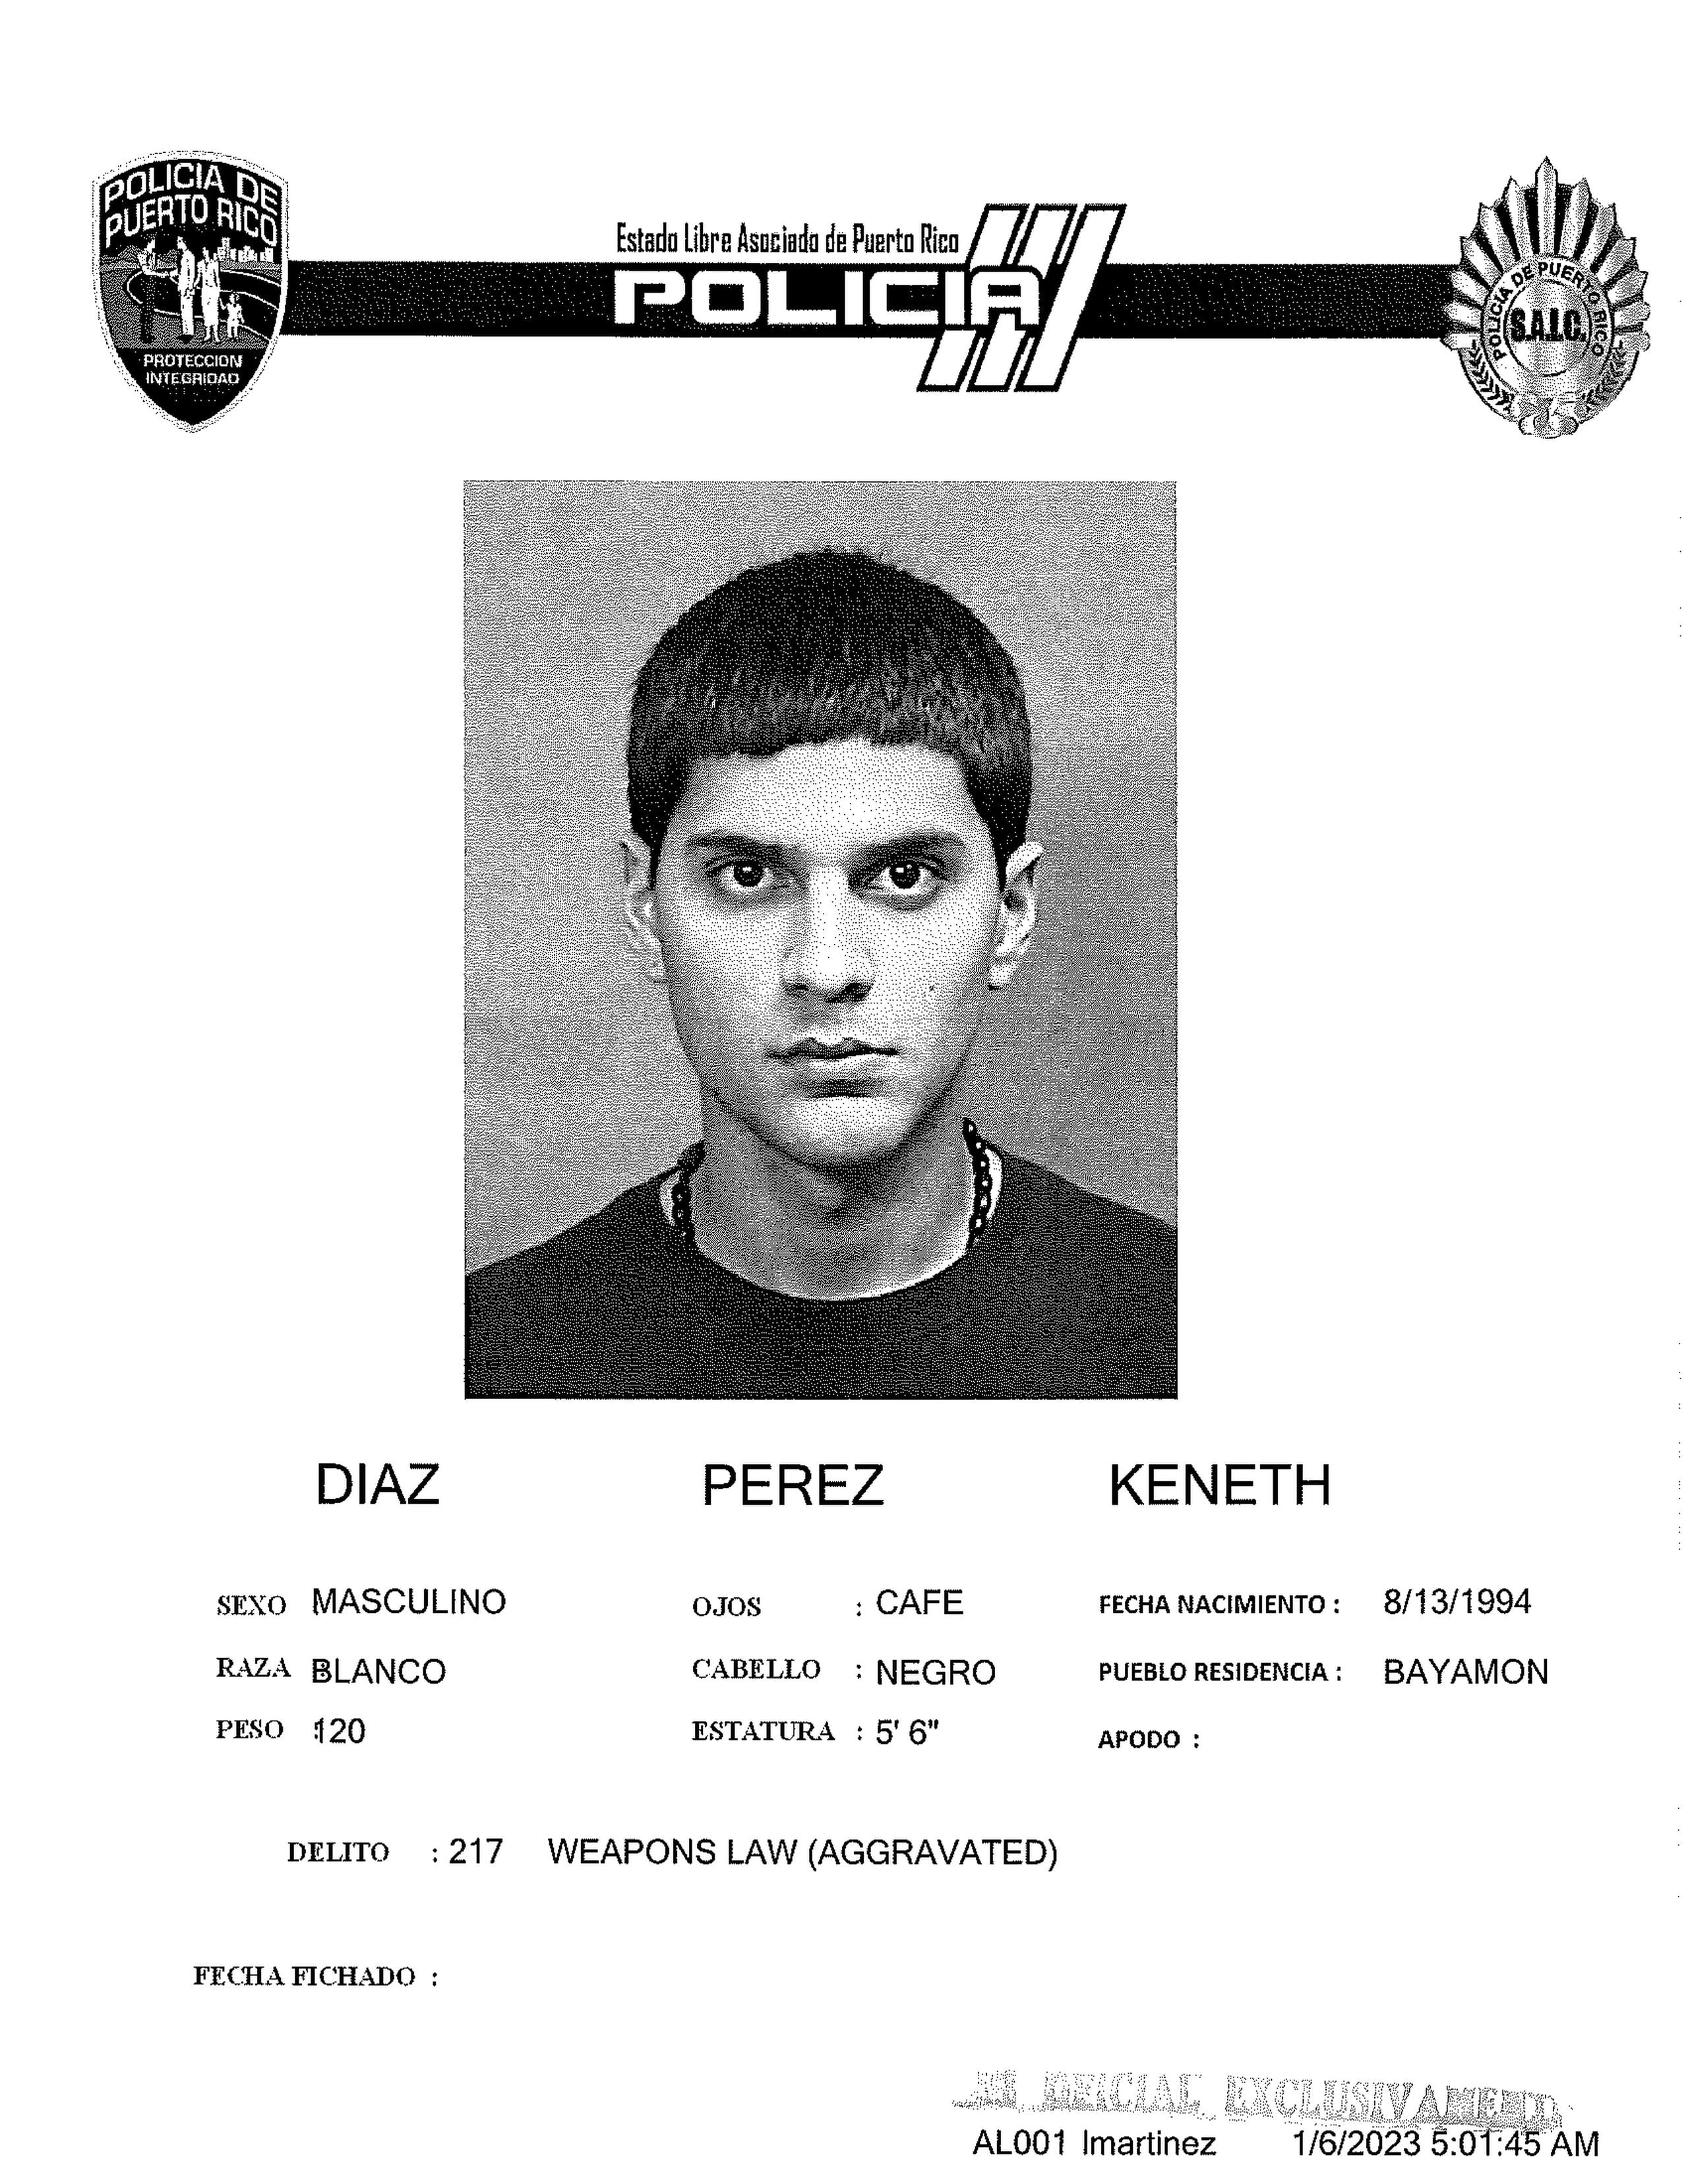 Ficha policíaca de Kenneth Díaz Pérez.